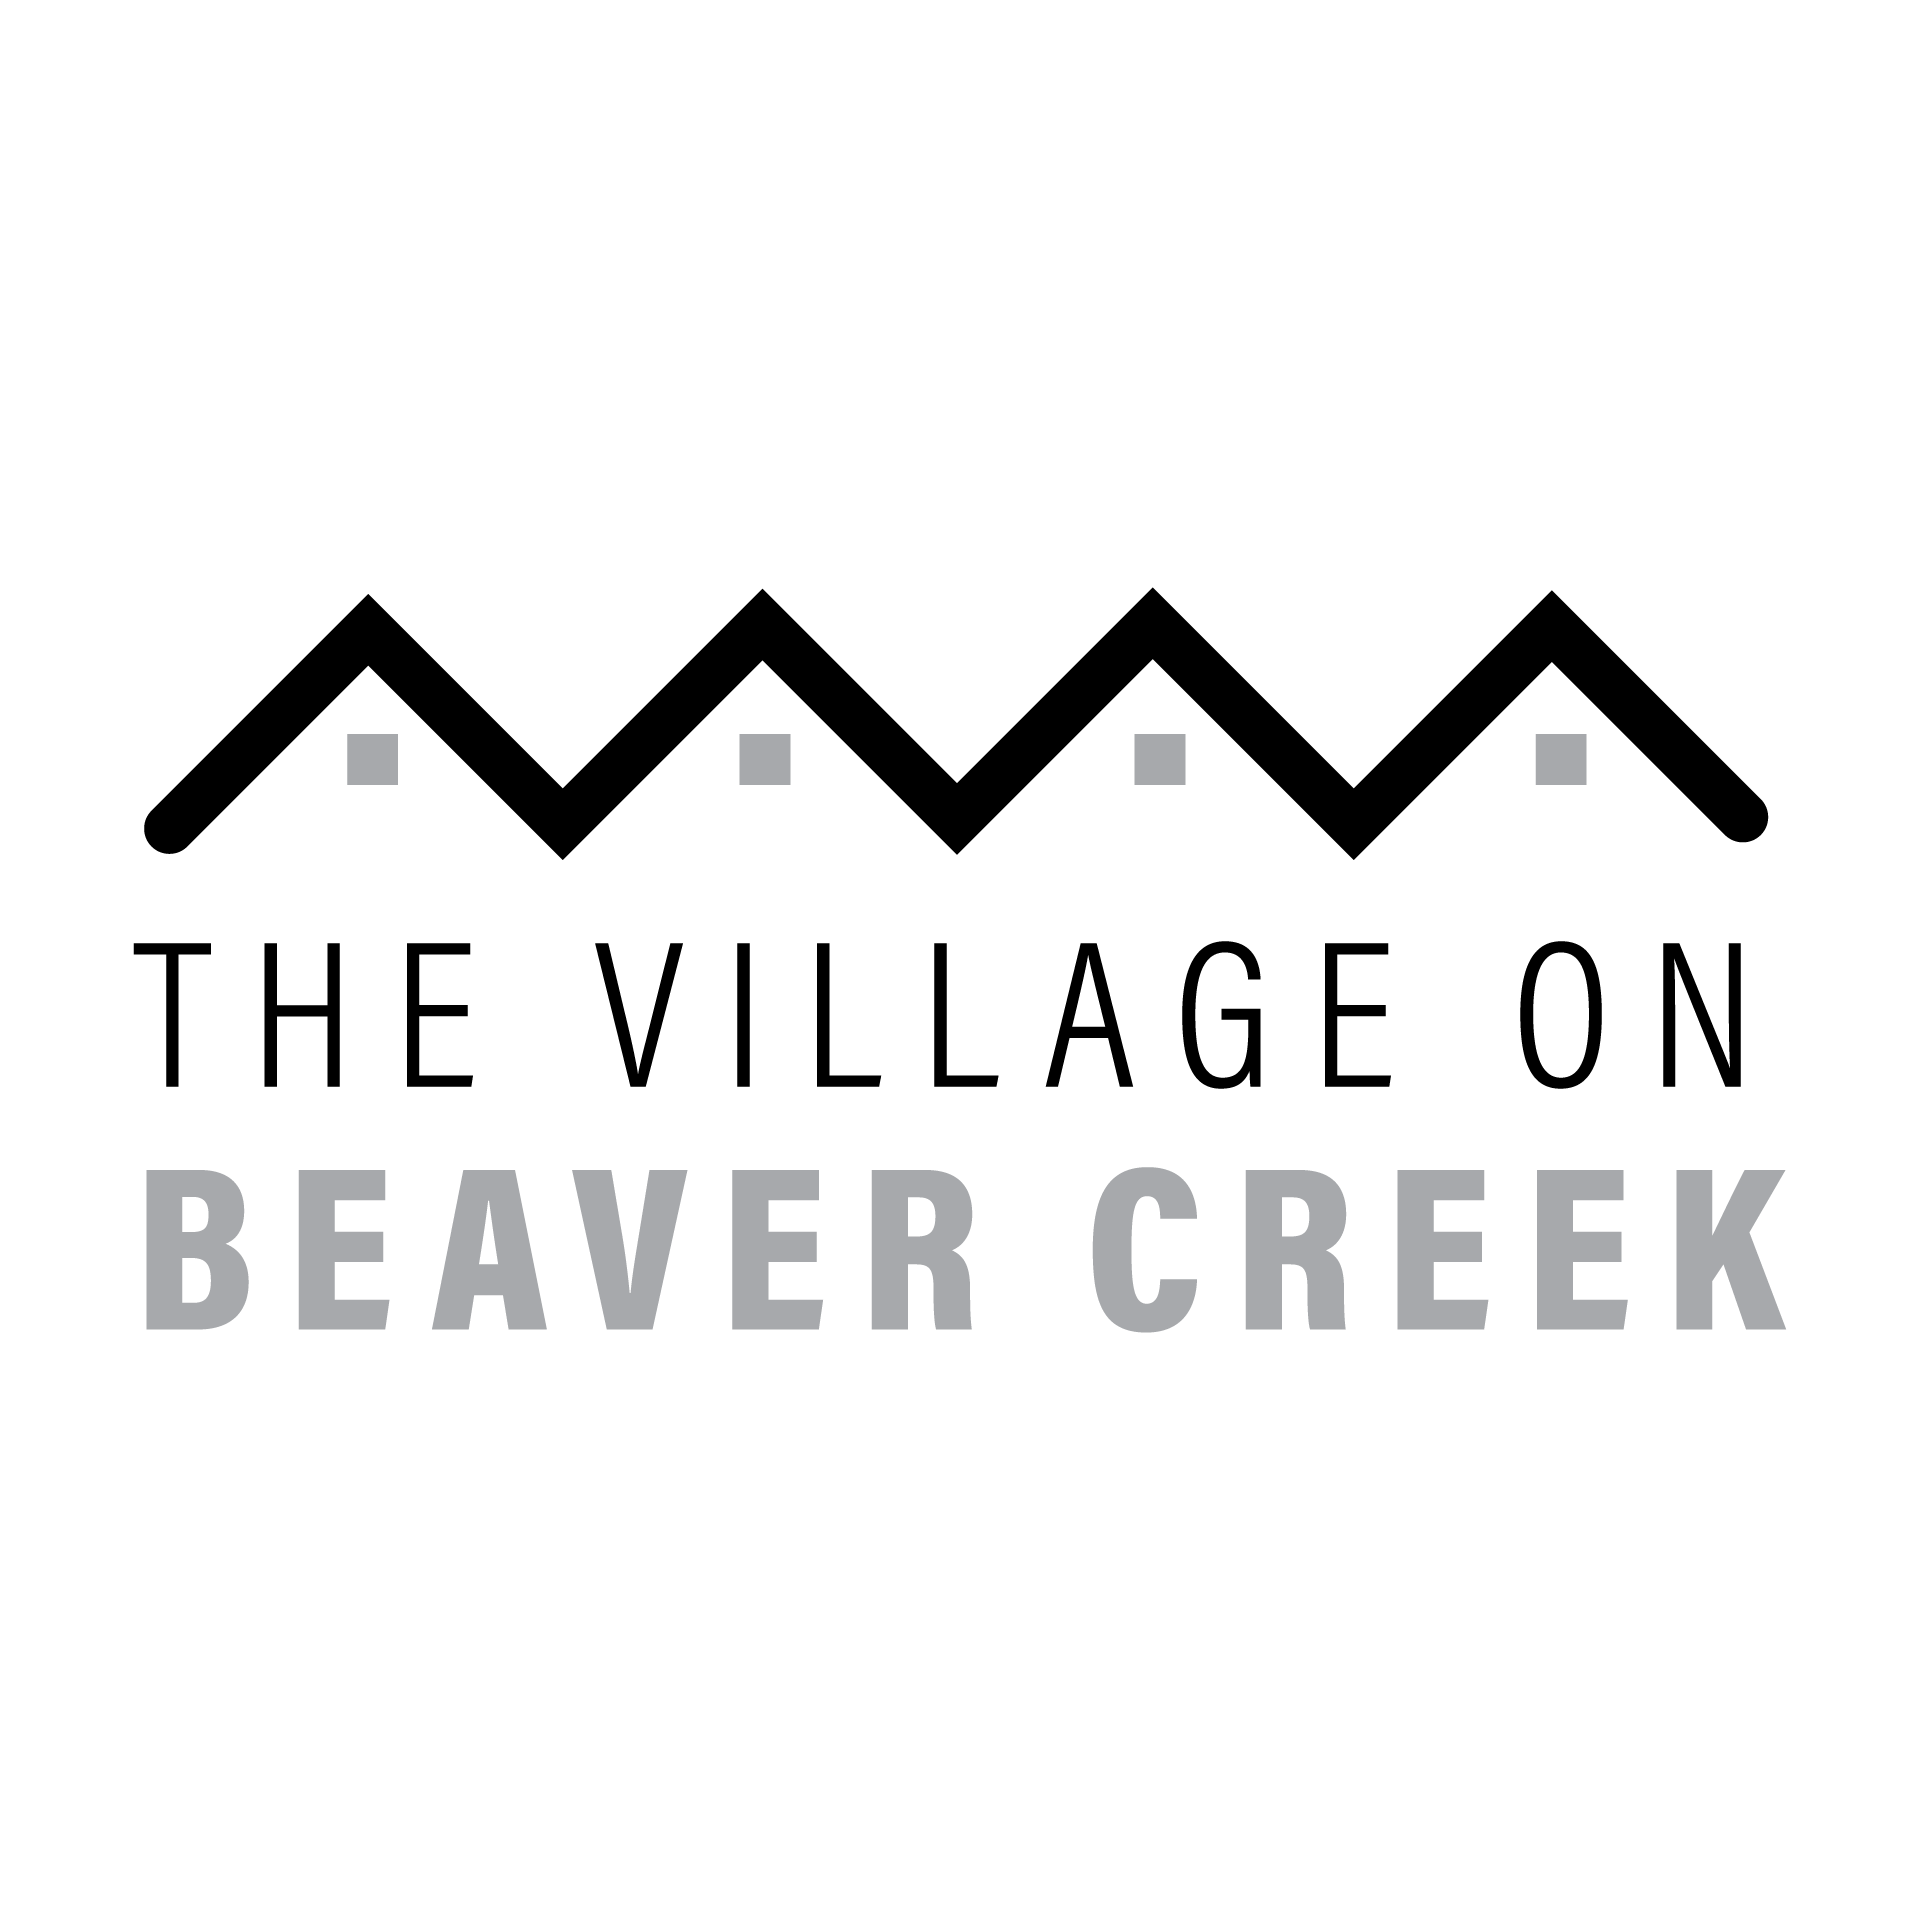 The Village on Beaver Creek Apartments - Beavercreek, OH 45430 - (937)749-9676 | ShowMeLocal.com